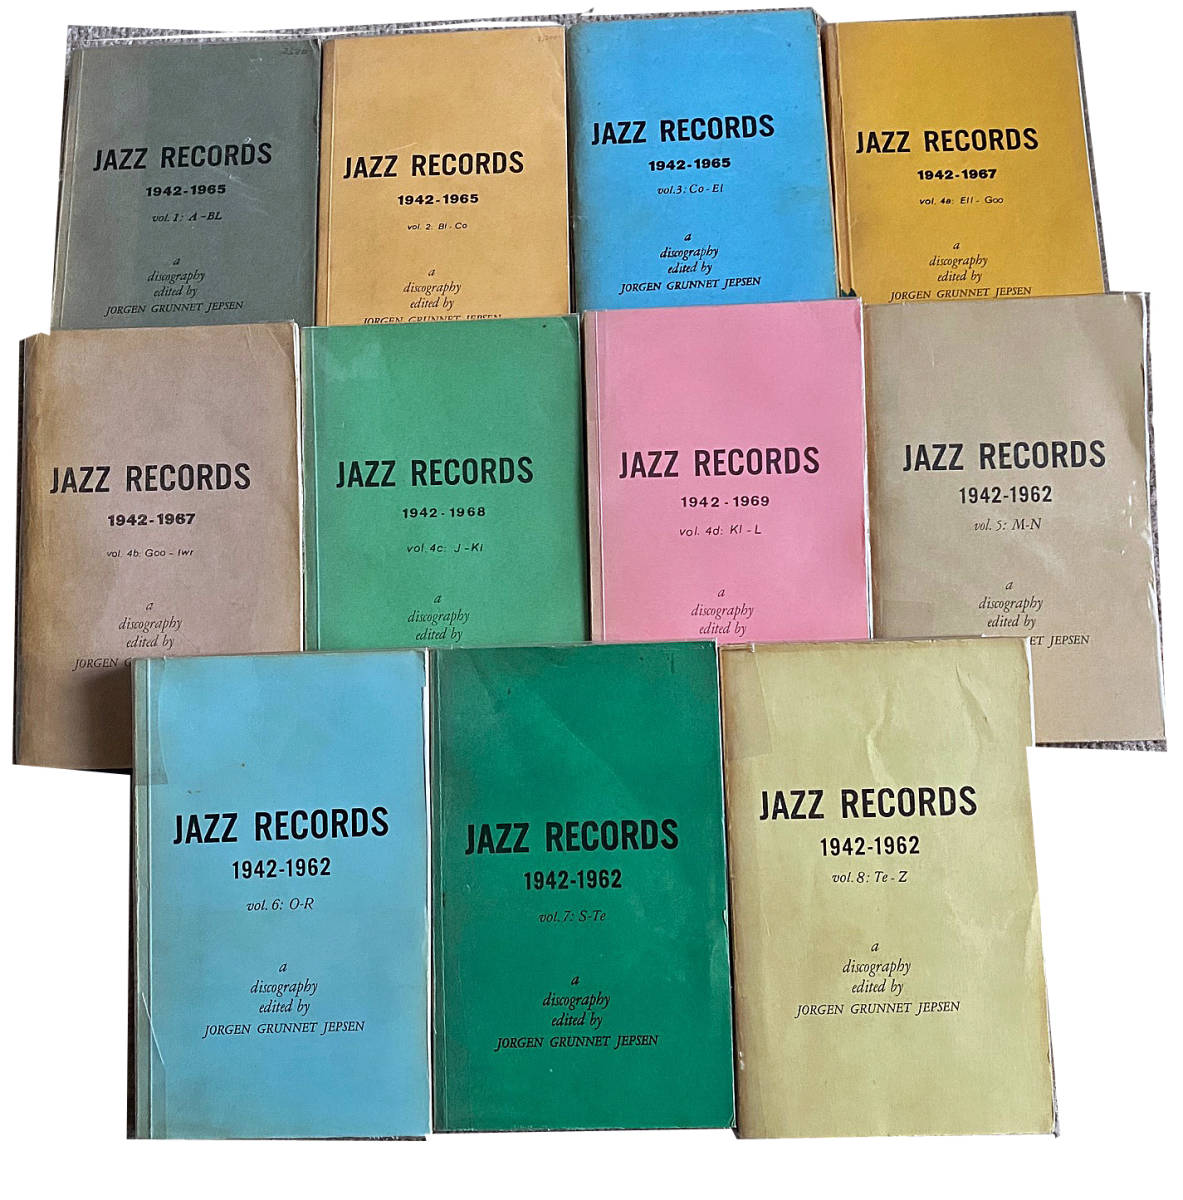 JAZZ RECORDS 1942-1962,1965,1967　A DISOGRAPHY　edited by JORGEN GRUNNET JEPSEN　11分冊一式